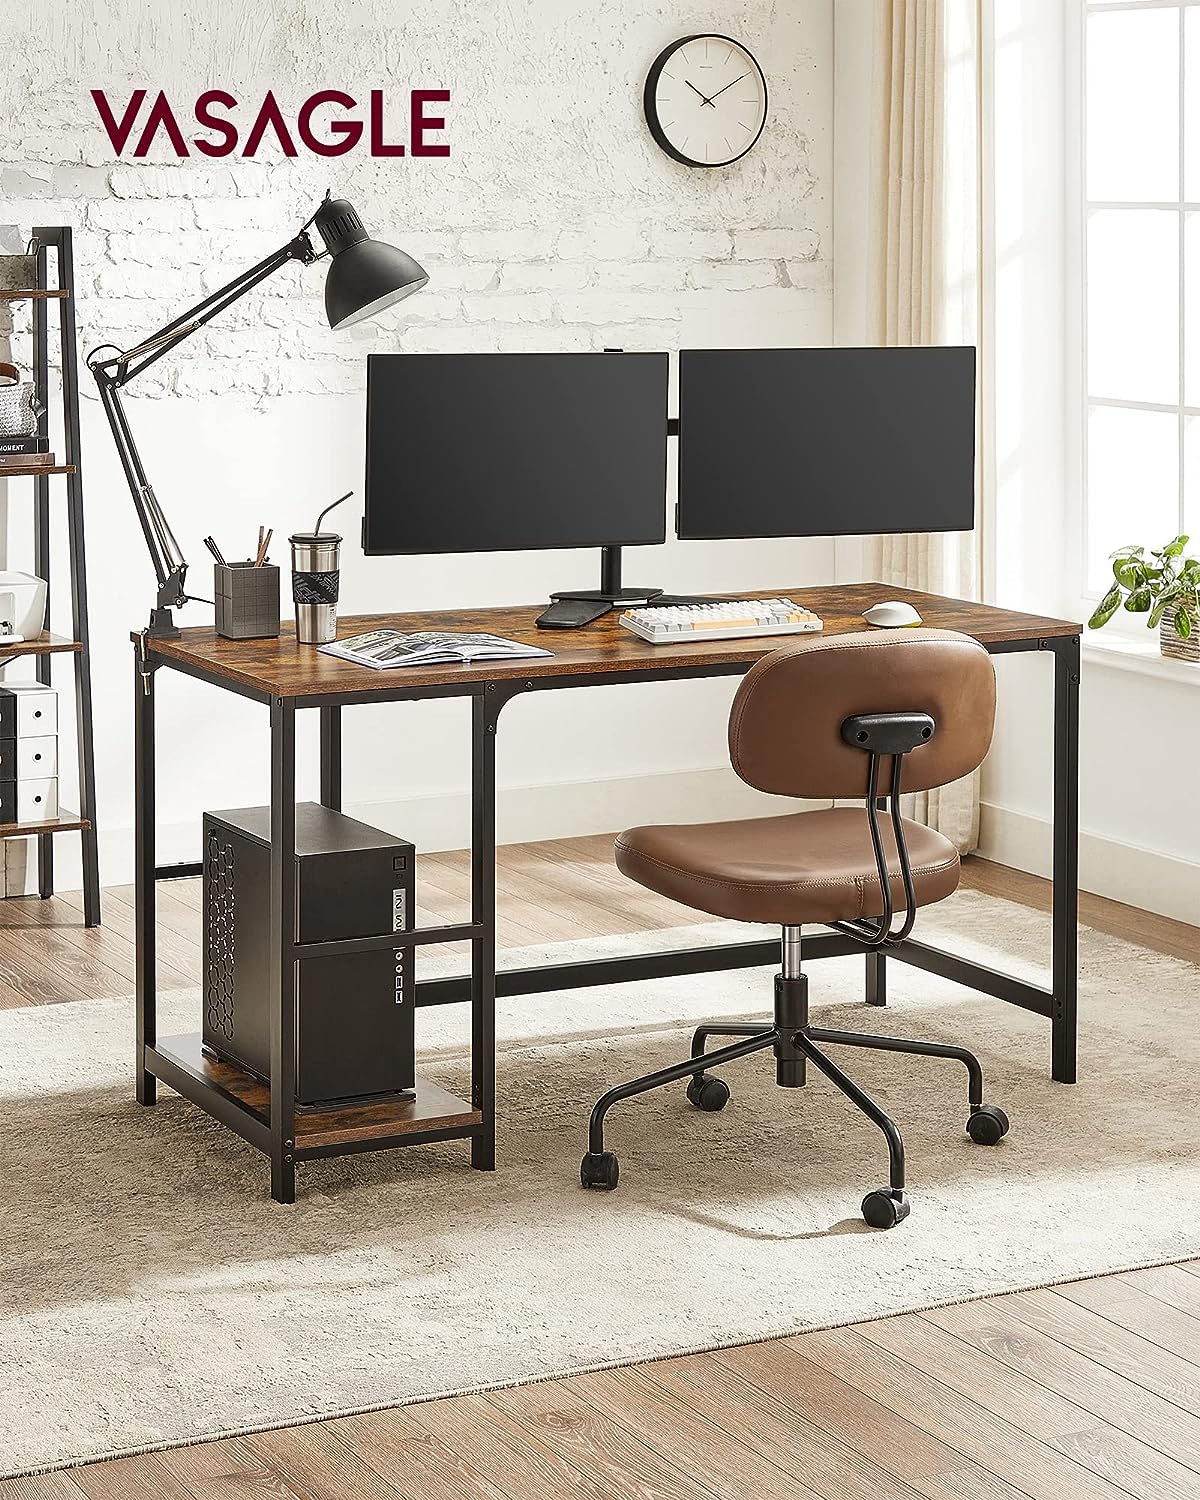 VASAGLE ALINRU Computer Desk, 55.1-Inch Wide Home Office Desk - $80